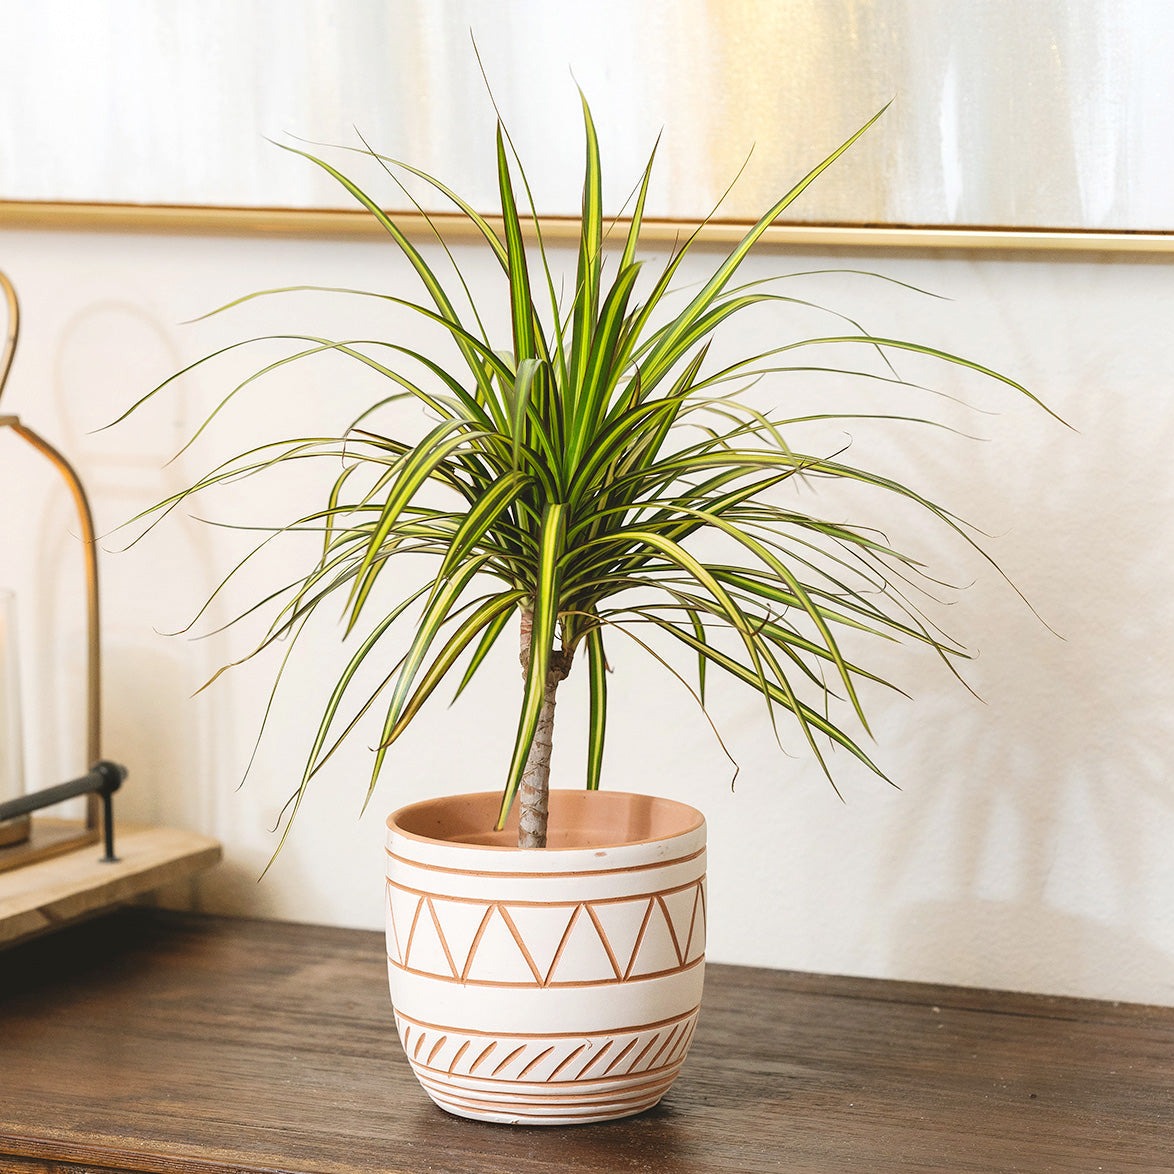 Dracaena Sunray Cane houseplant in decorative clay pot, houseplant decor ideas